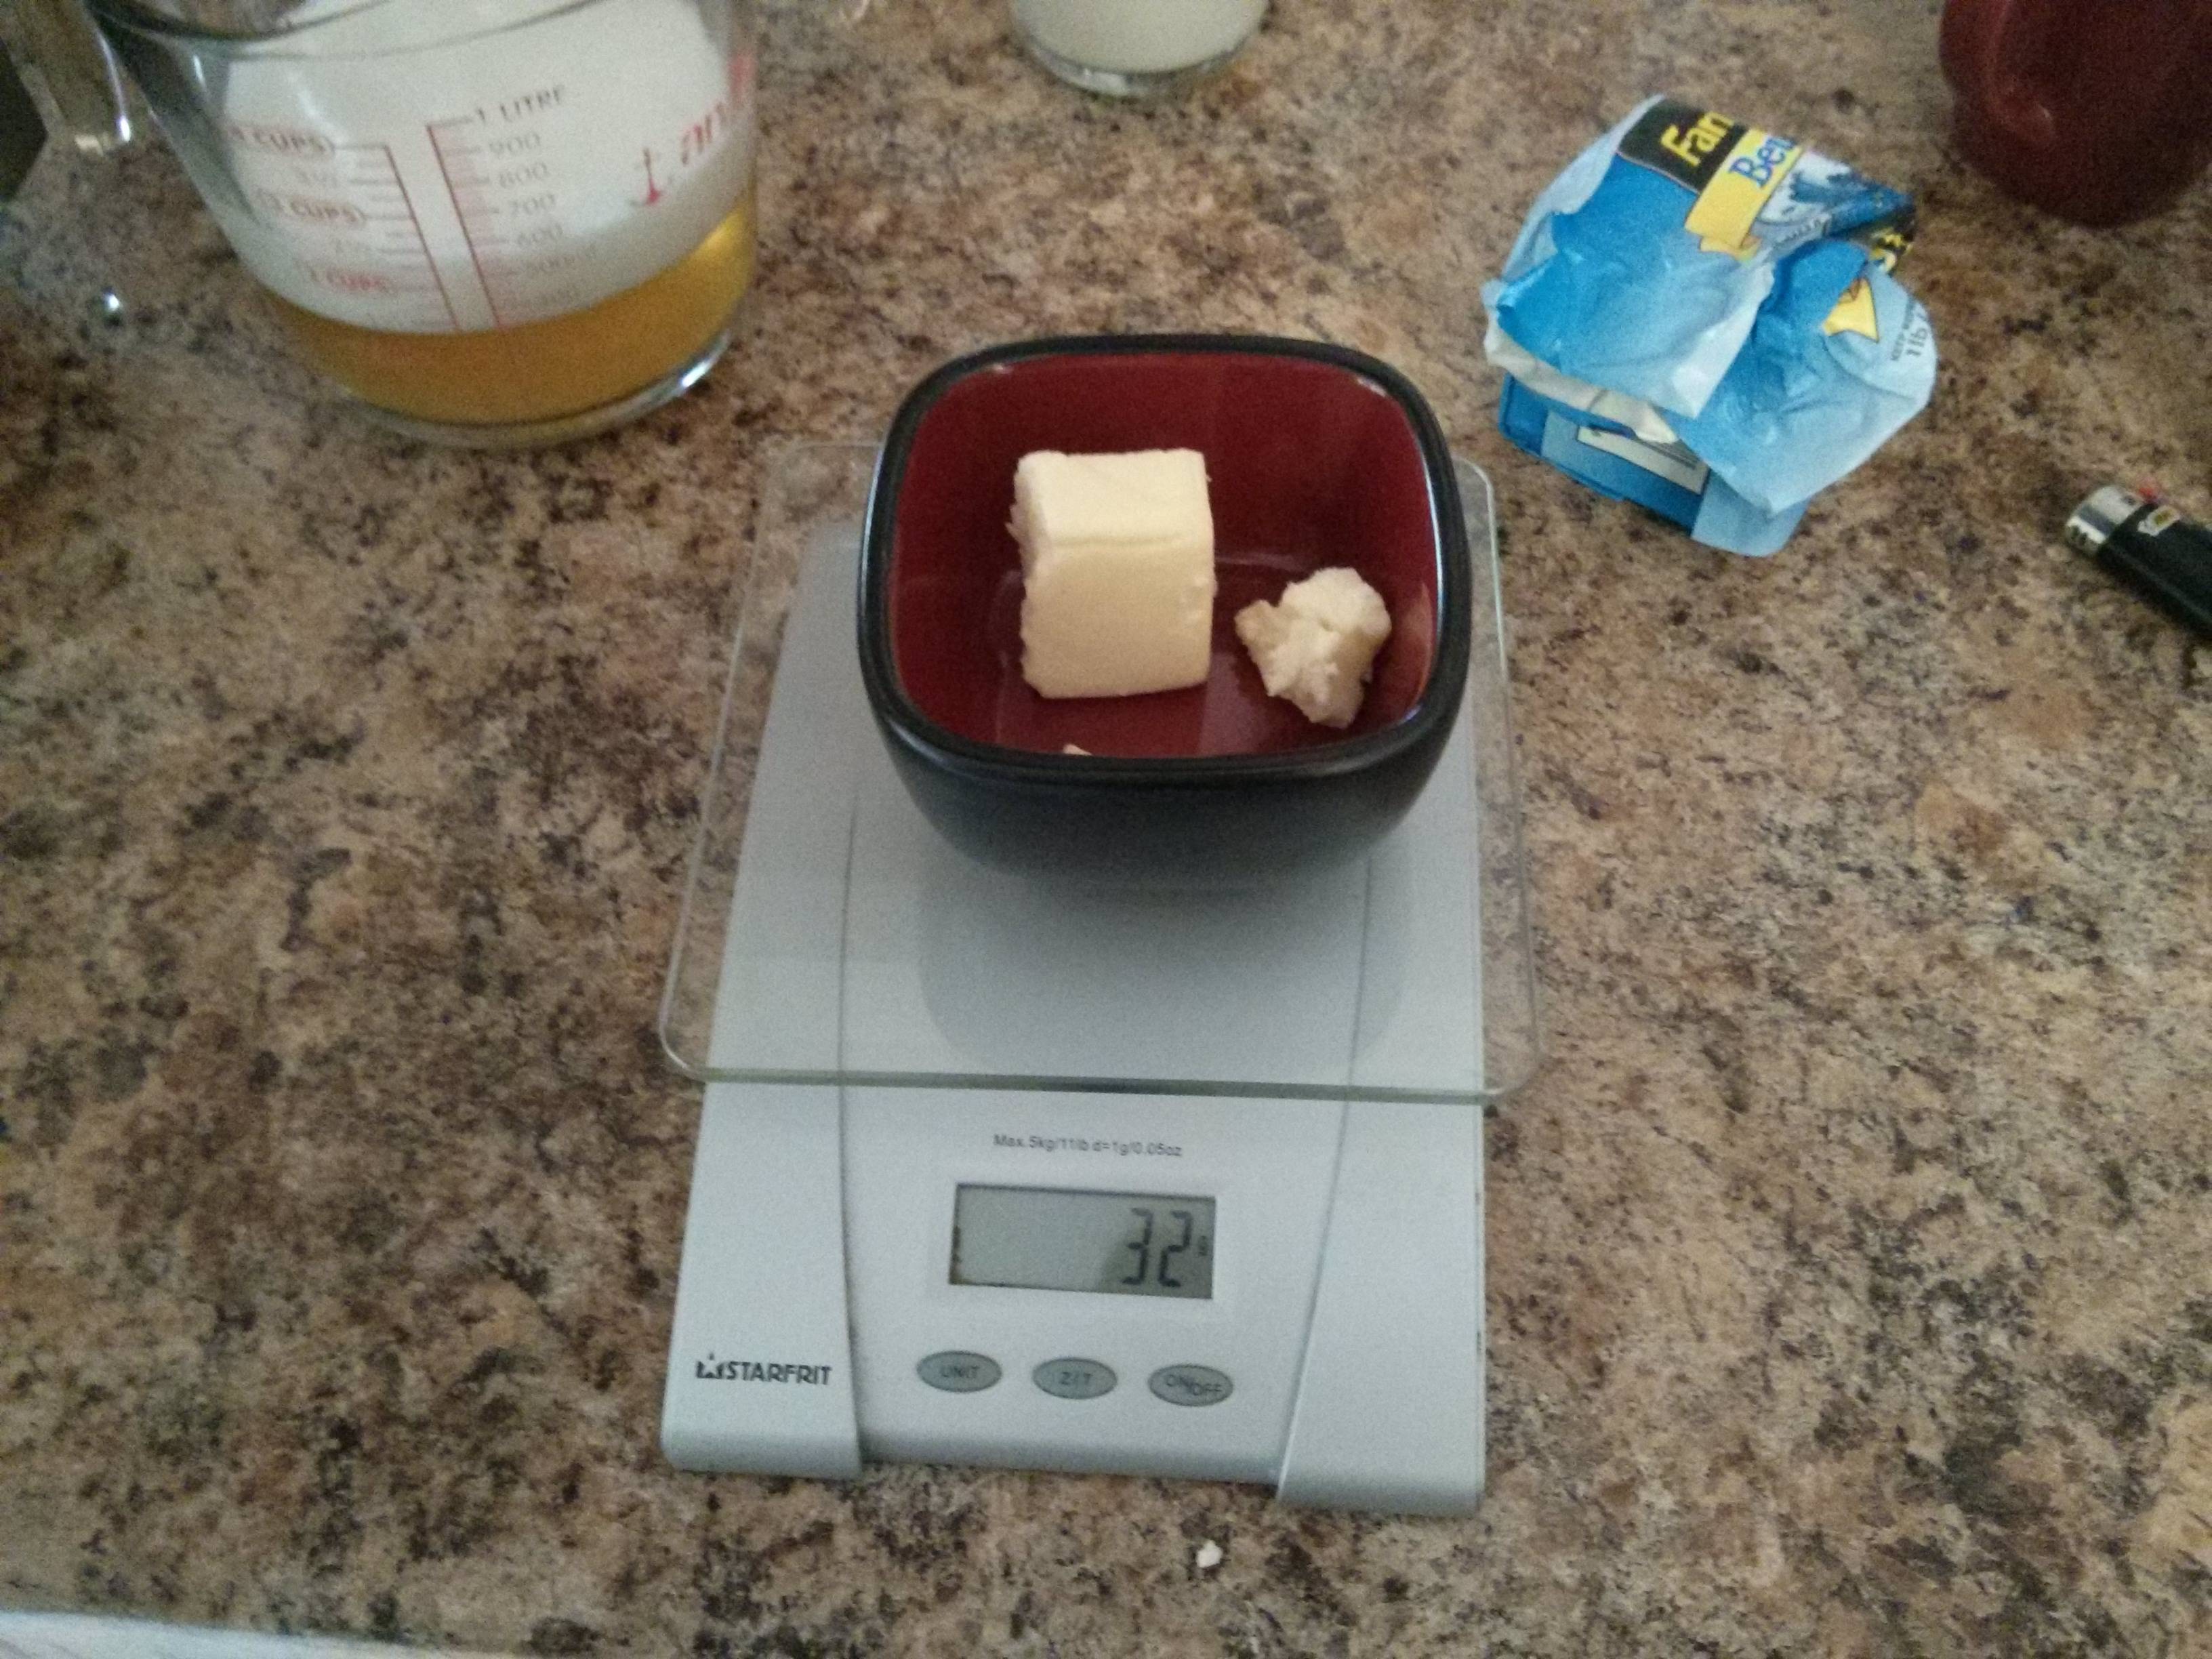 30 grams of butter